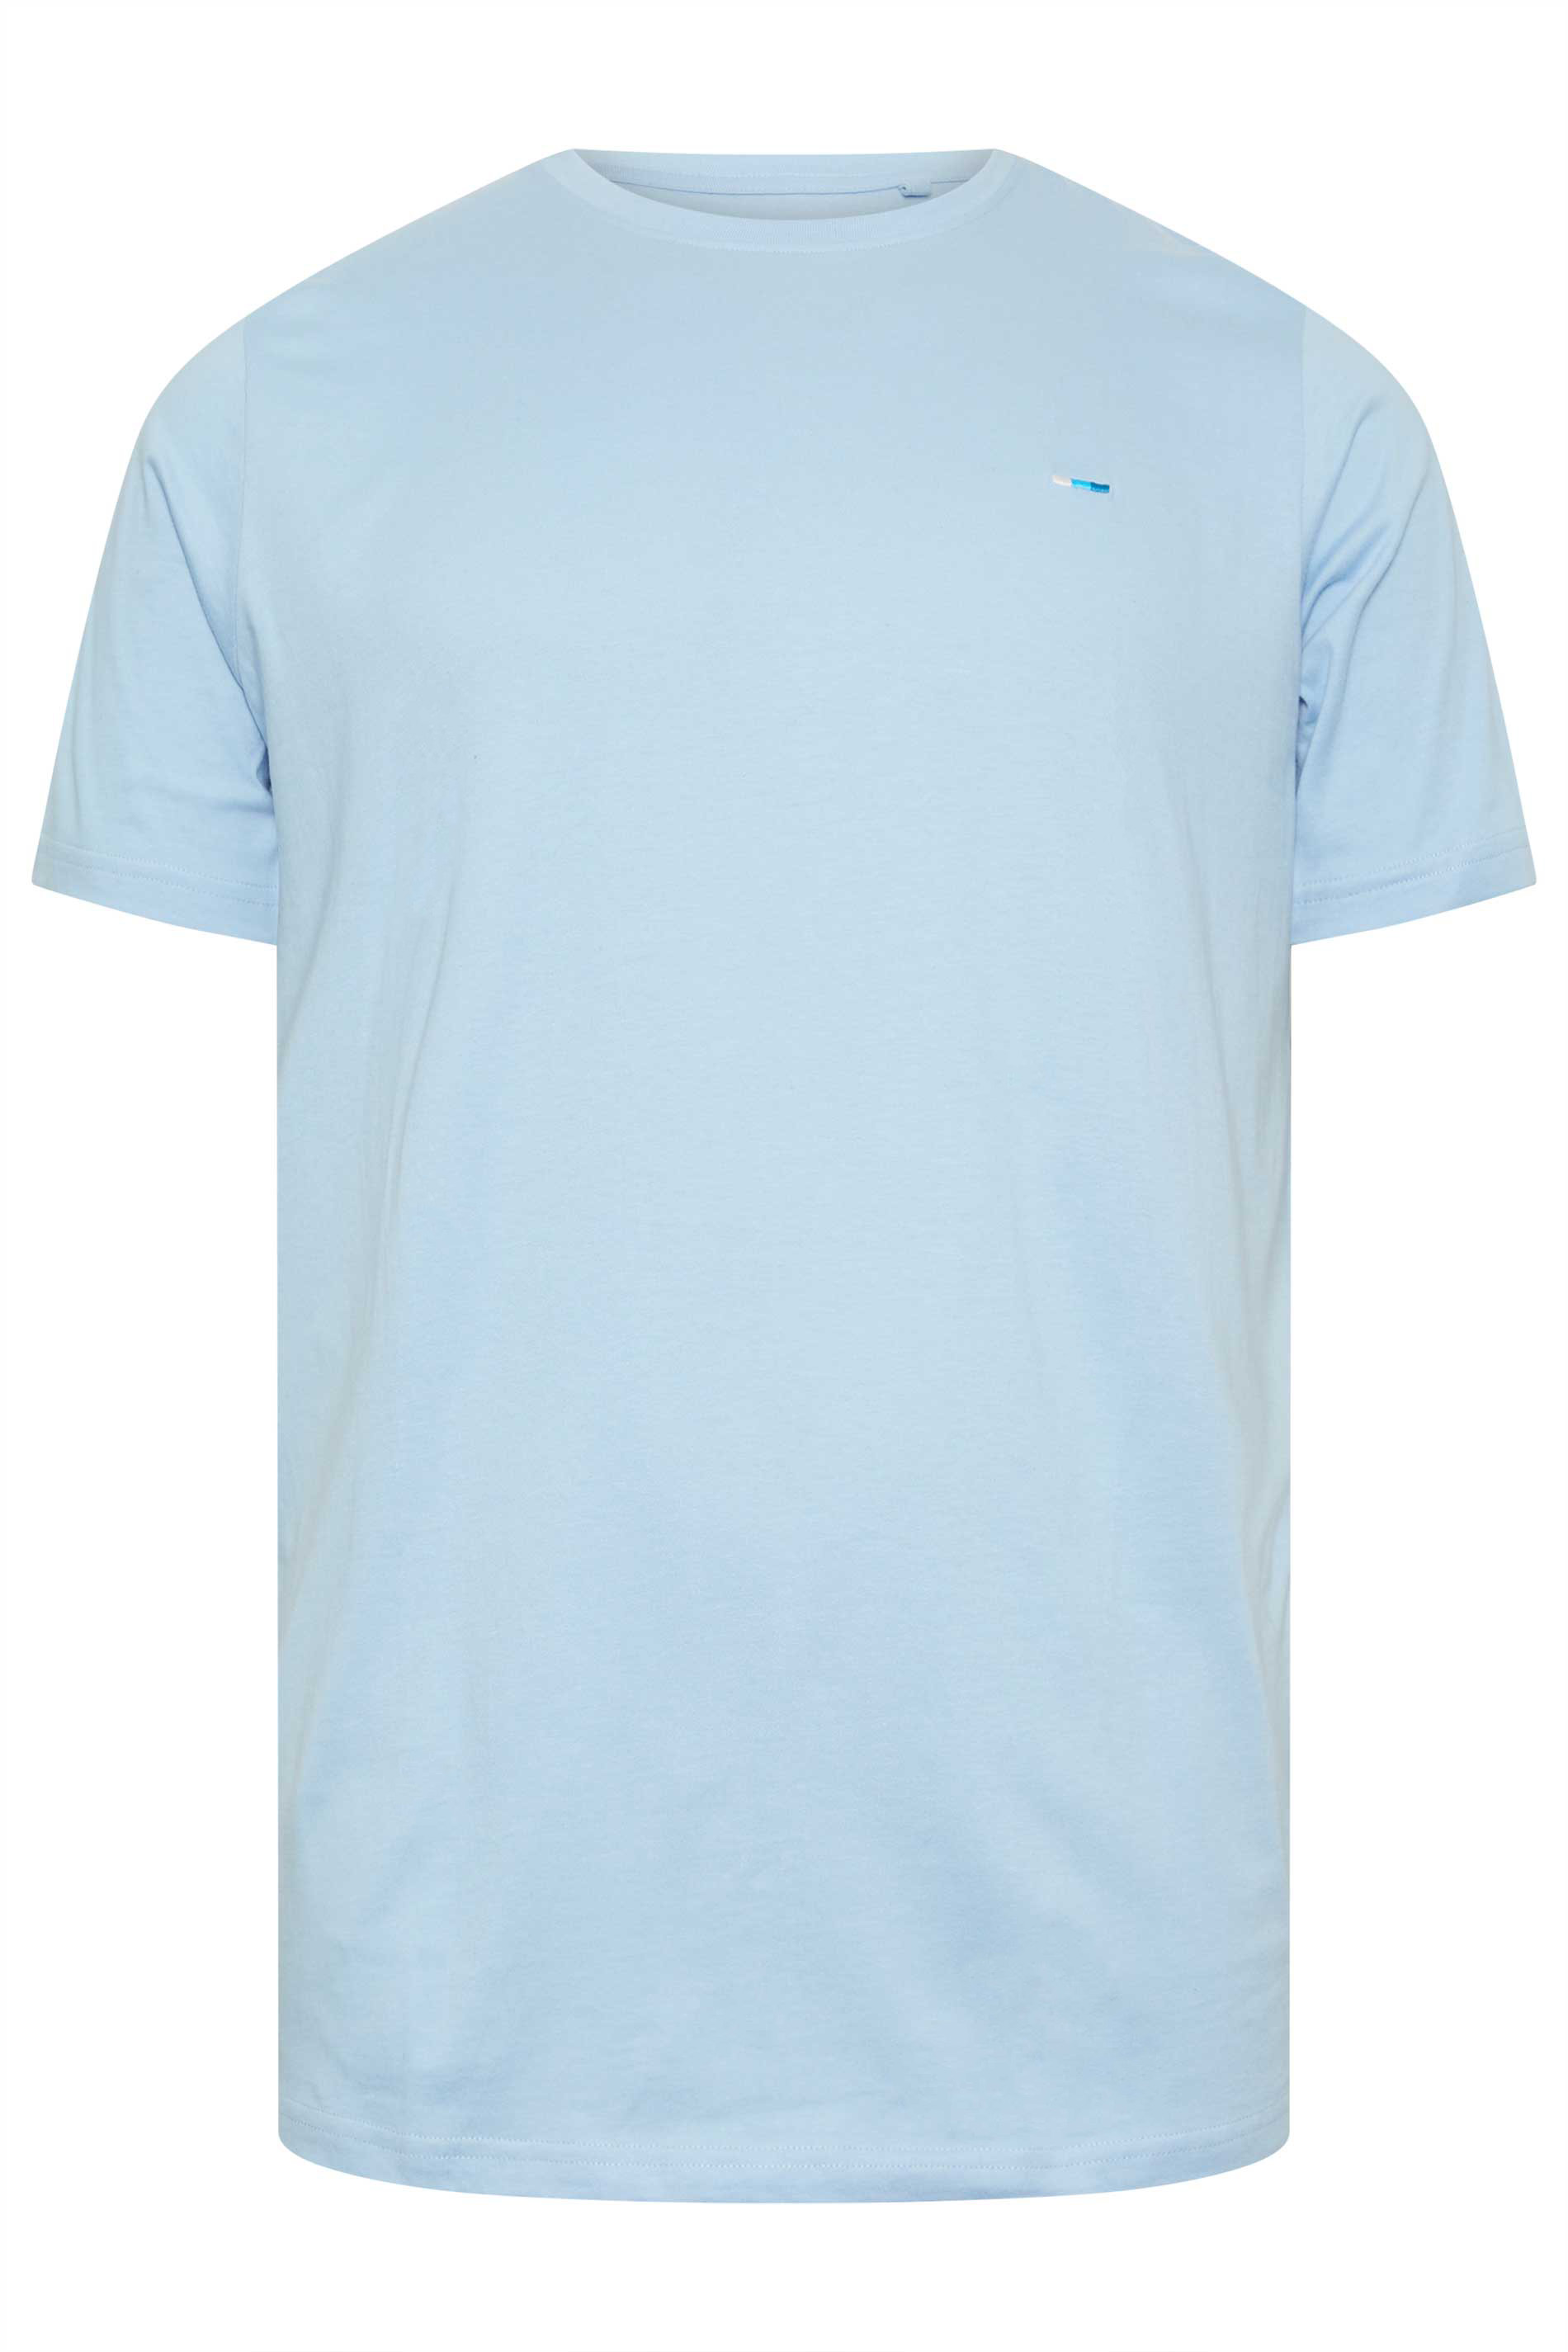 BadRhino Big & Tall Chambray Blue Core T-Shirt | BadRhino 3